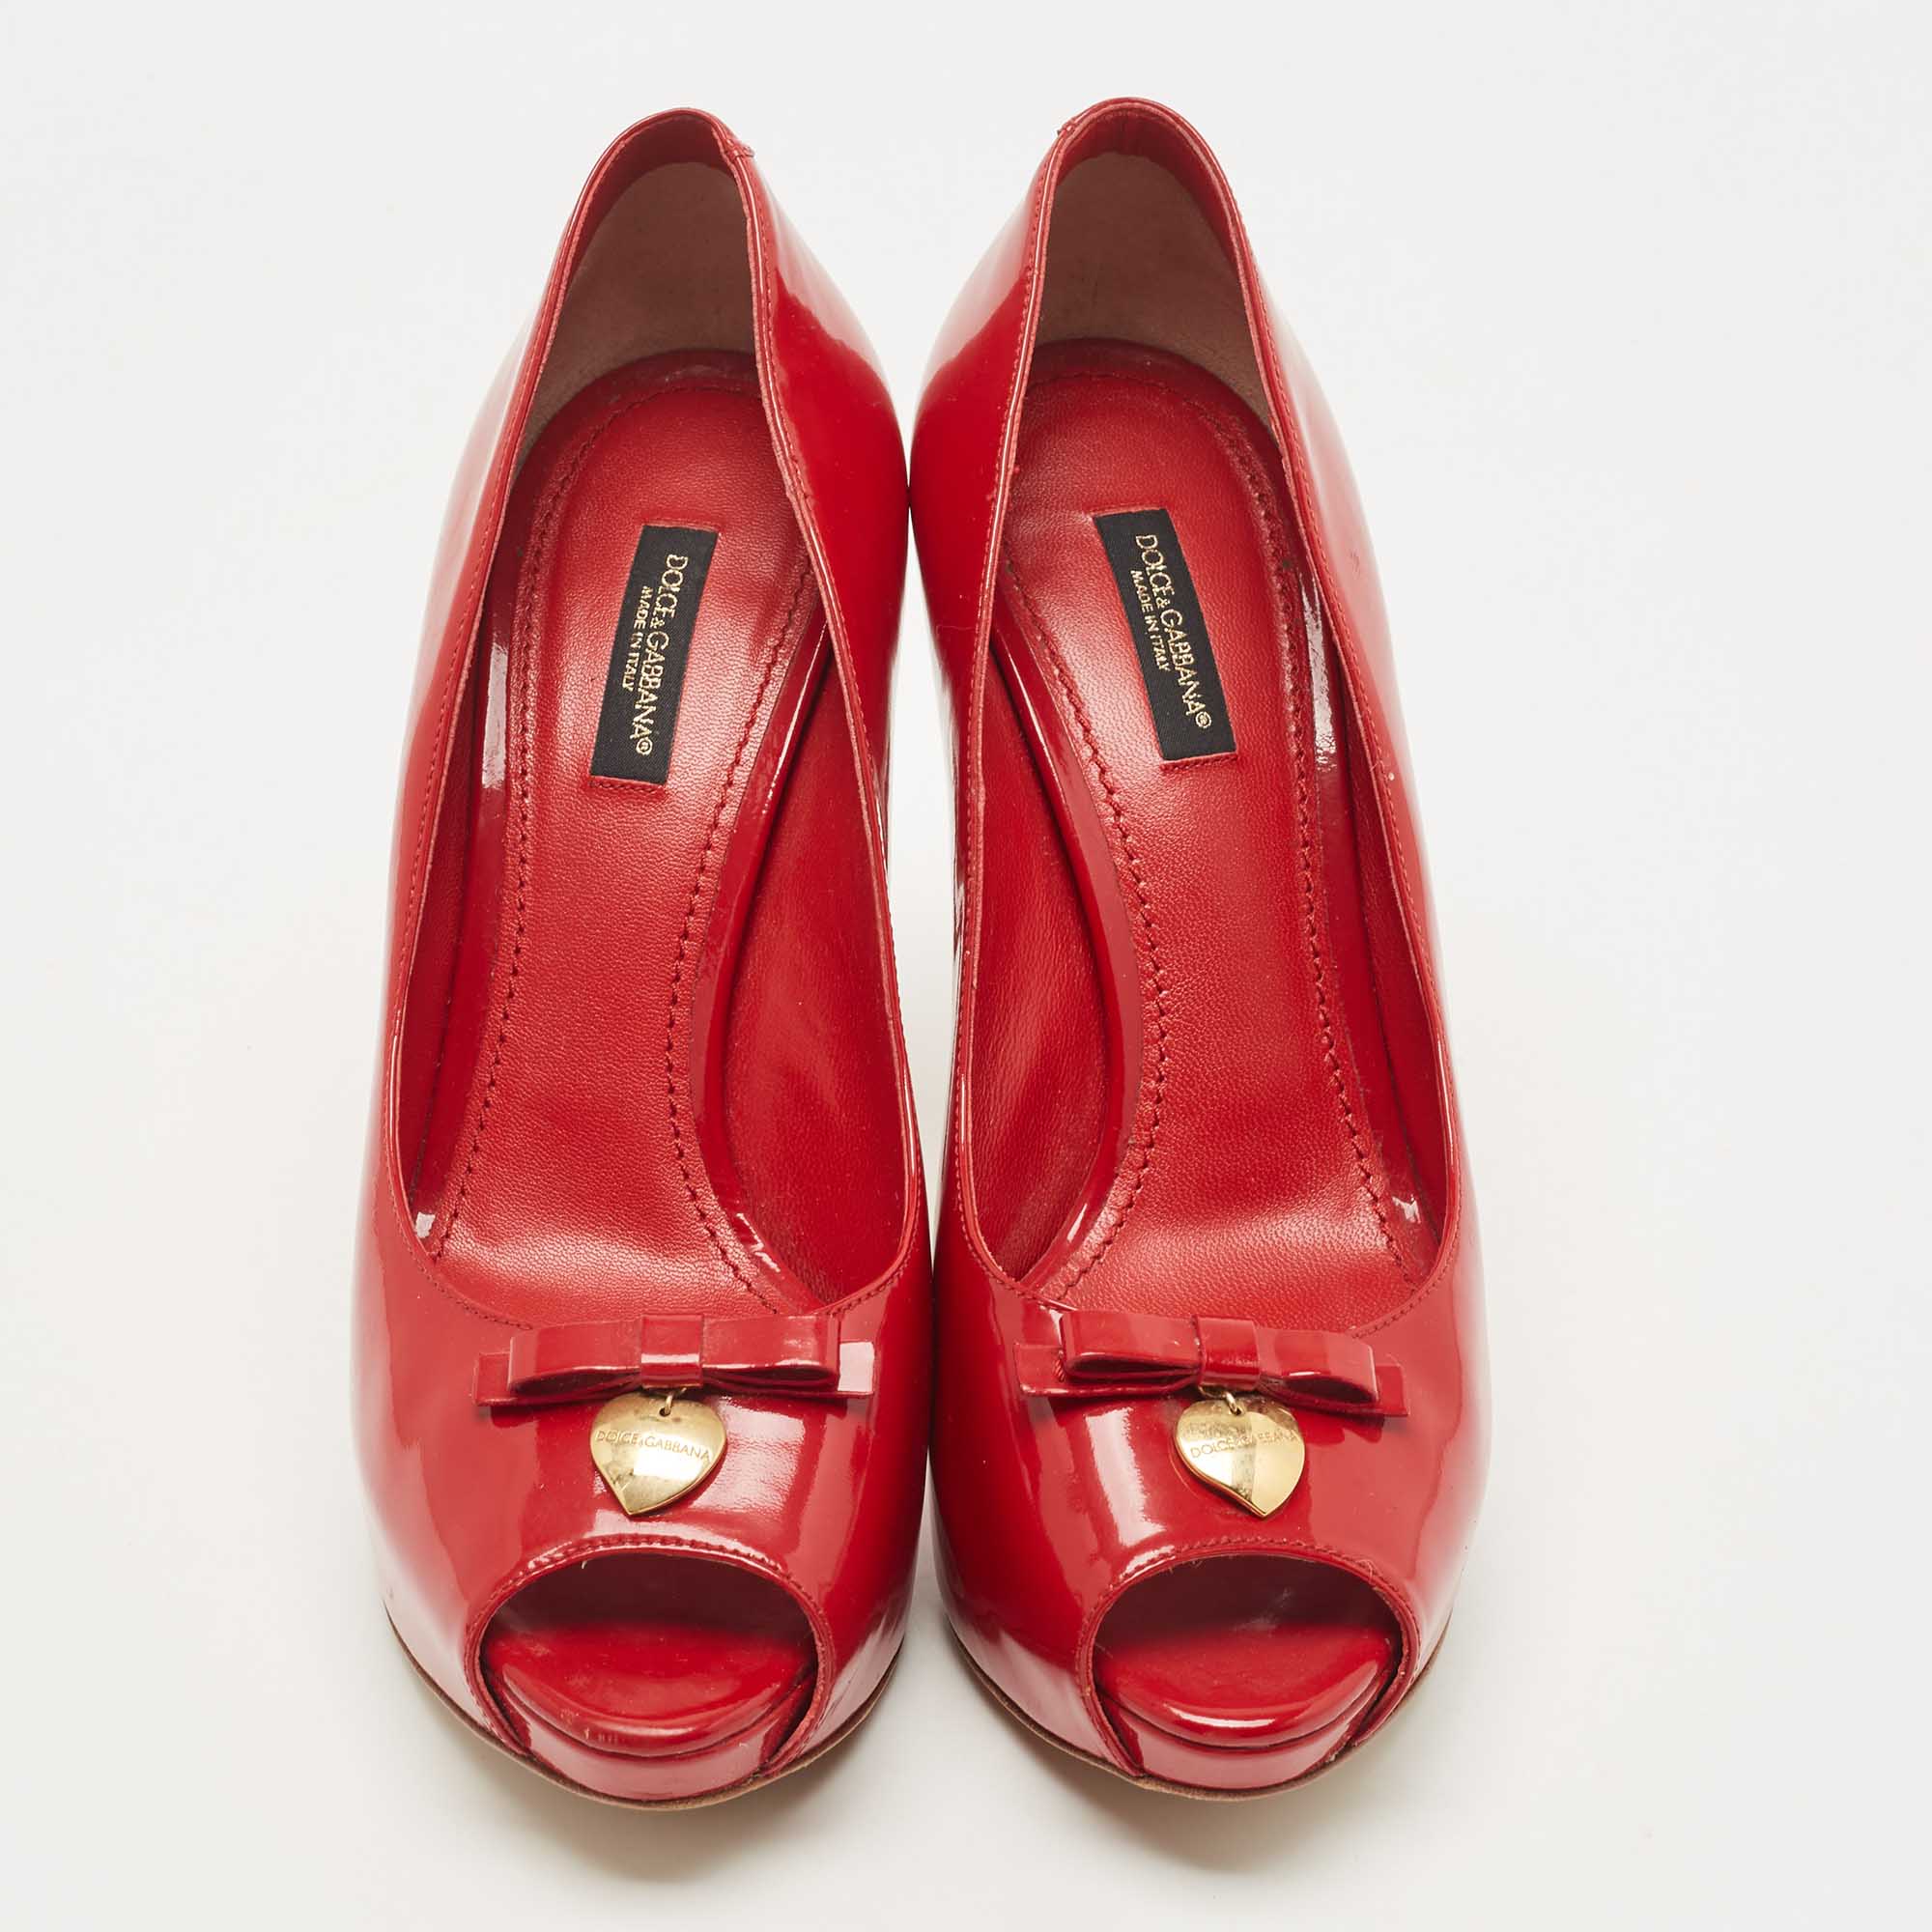 Dolce & Gabbana Red Patent Leather Bow Peep Toe Platform Pumps Size 38